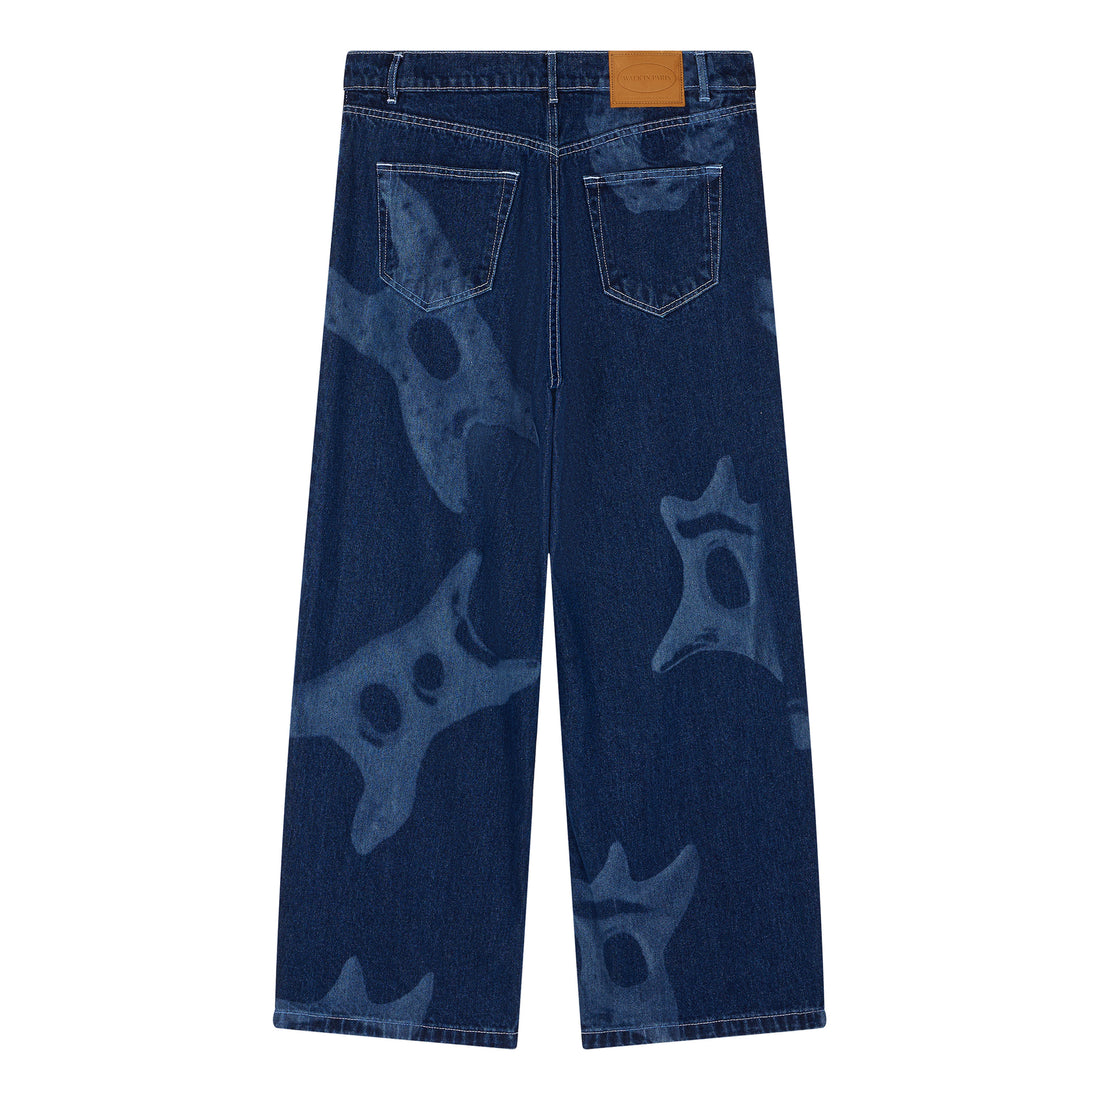 The Desinova jeans